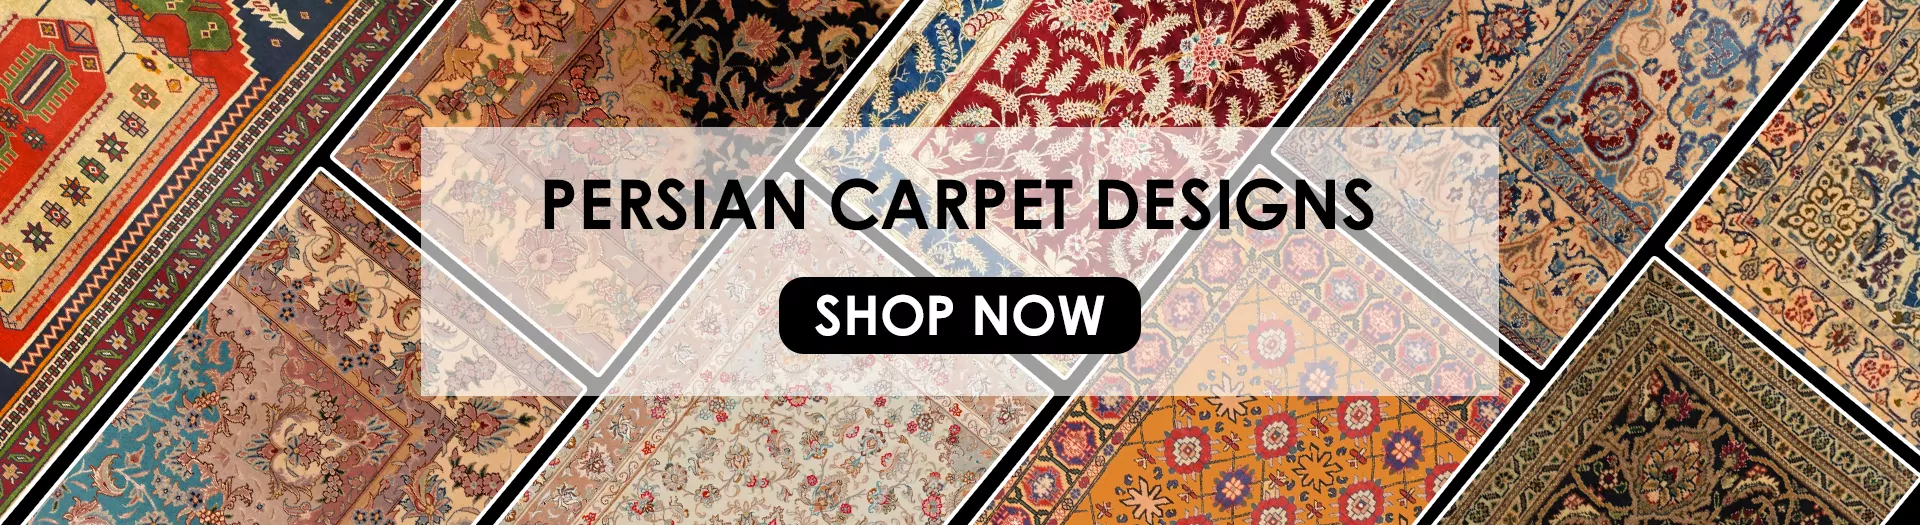 Persian Carpet Design